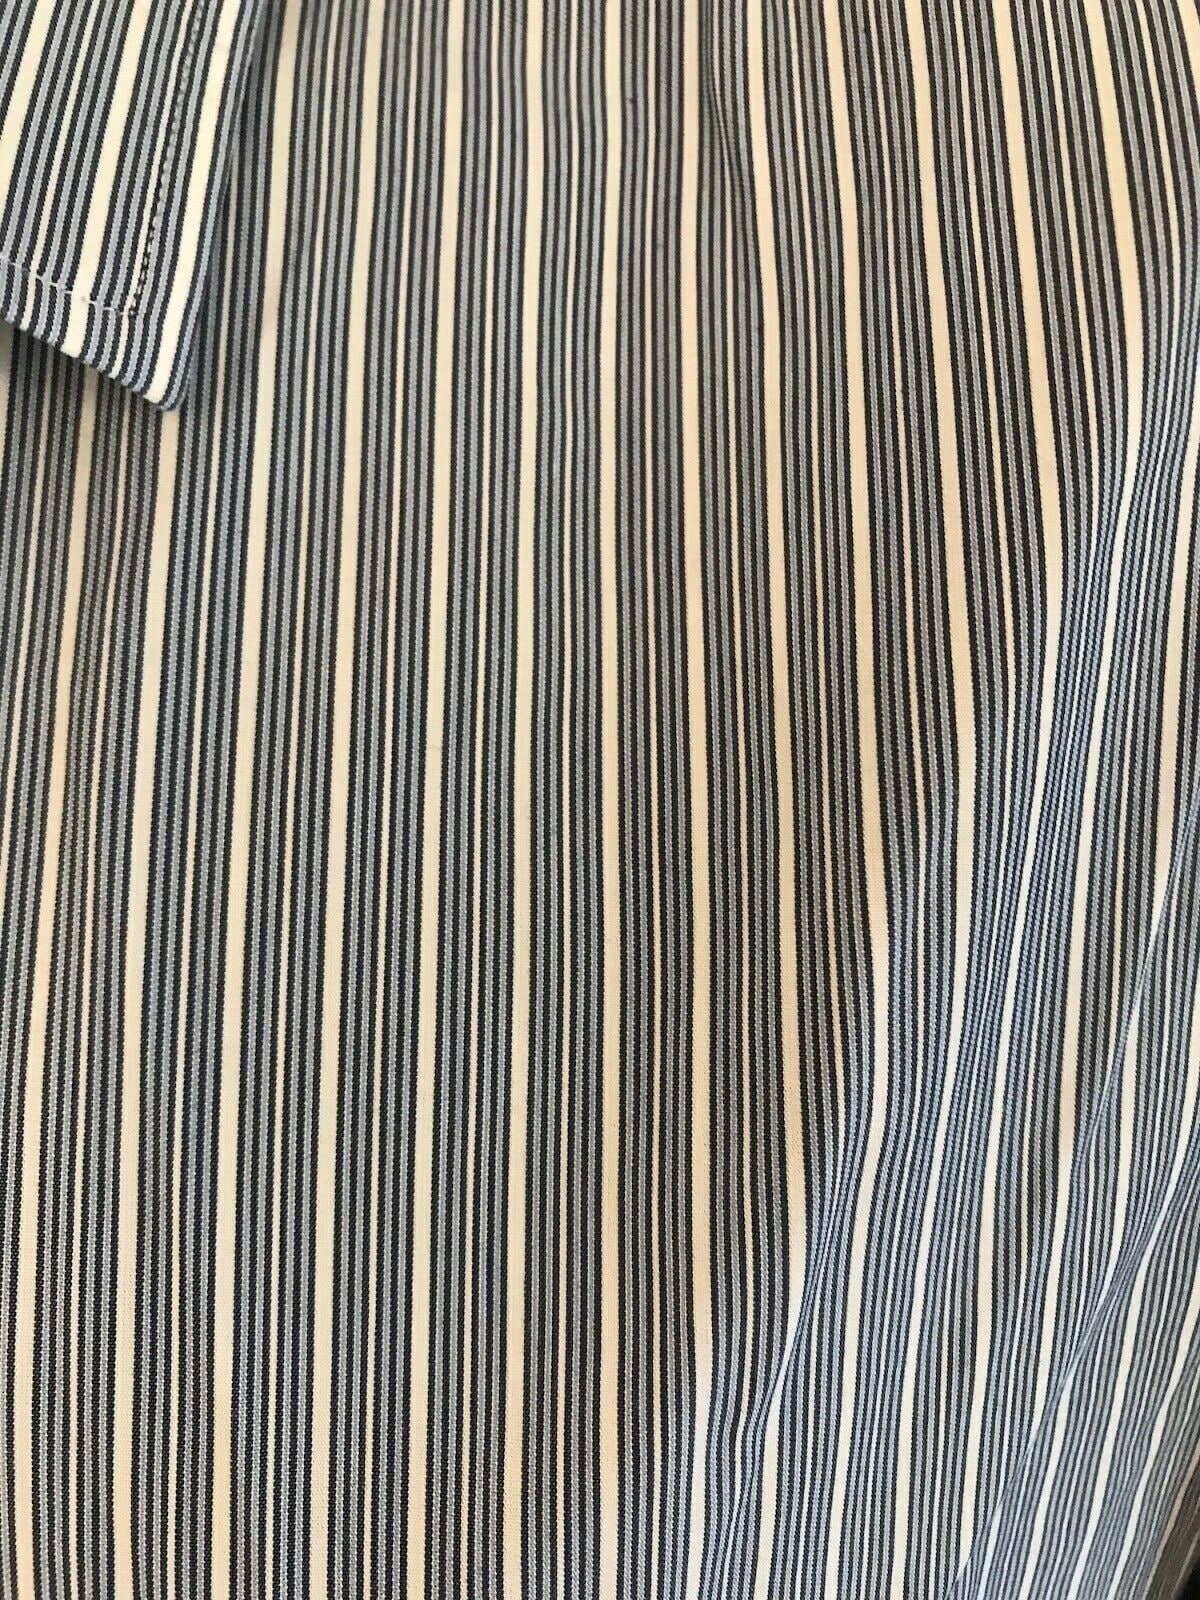 Hugo Boss Mens Blue & White Striped Cotton Shirt Size 42 Timeless Fashions